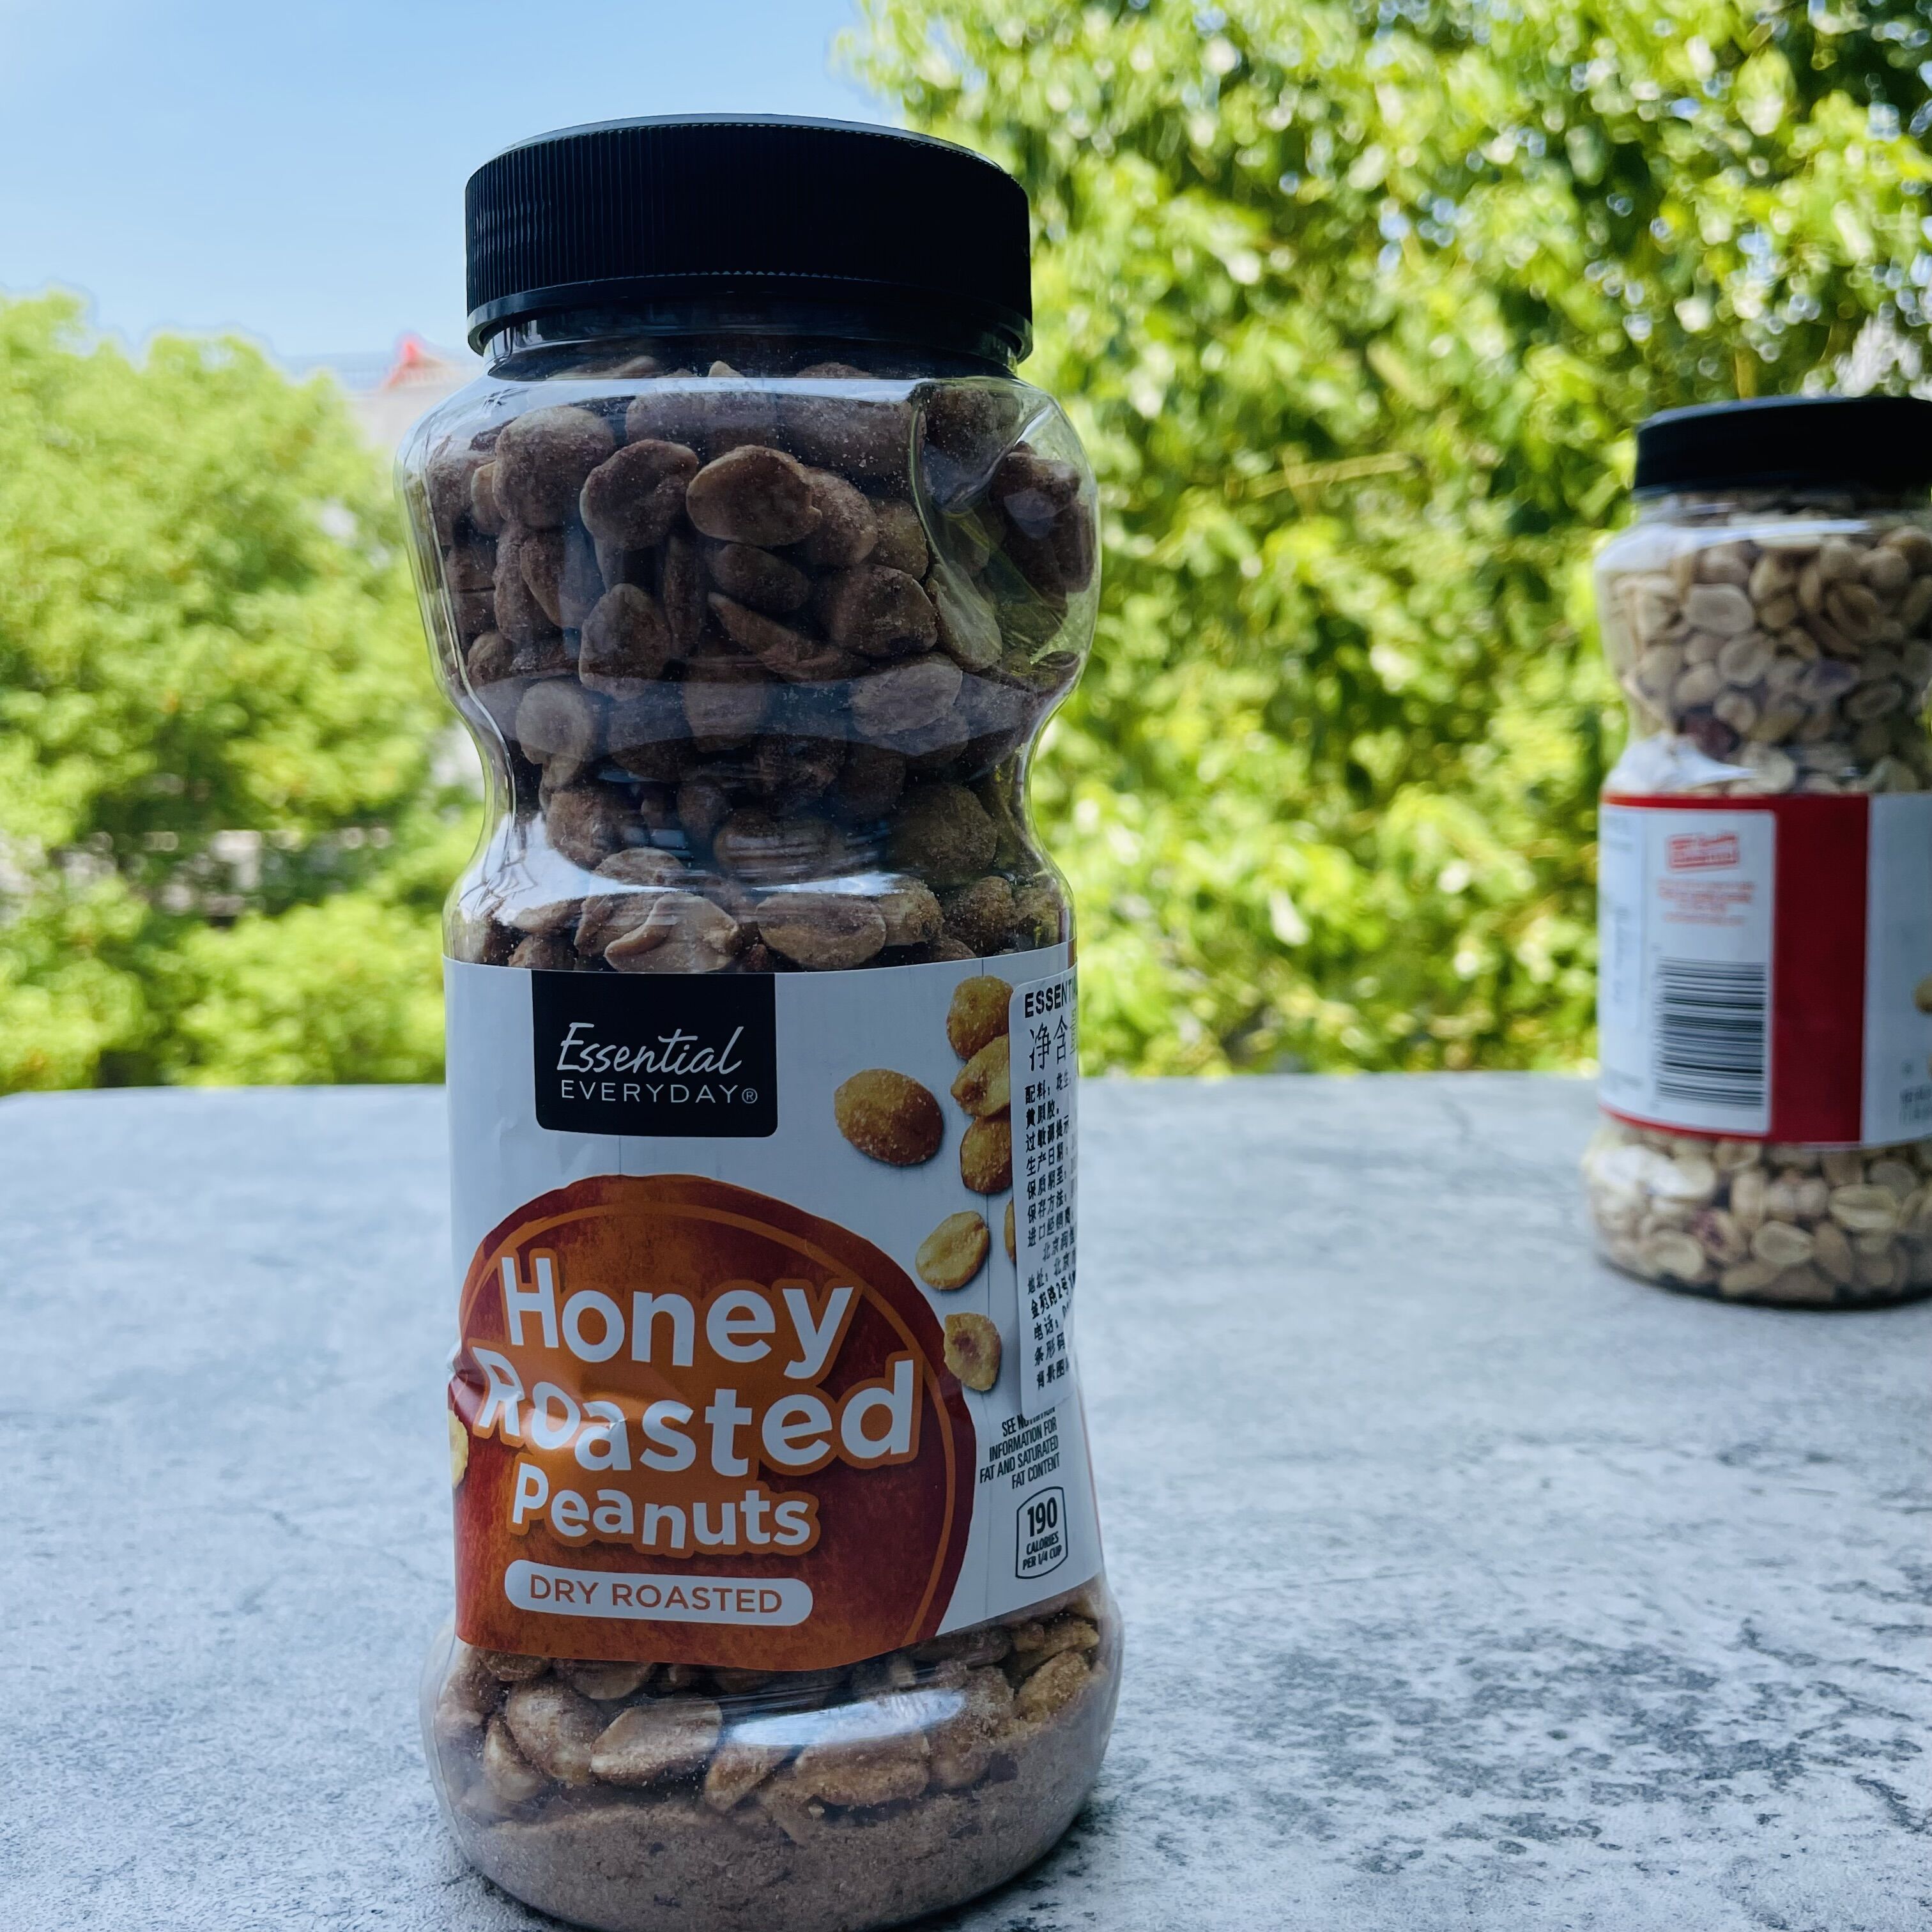 CLCEY美国进口Dry Roasted Peanuts每日之选干焗花生蜂蜜味/咸味/无盐 honey蜂蜜干焗花生453g